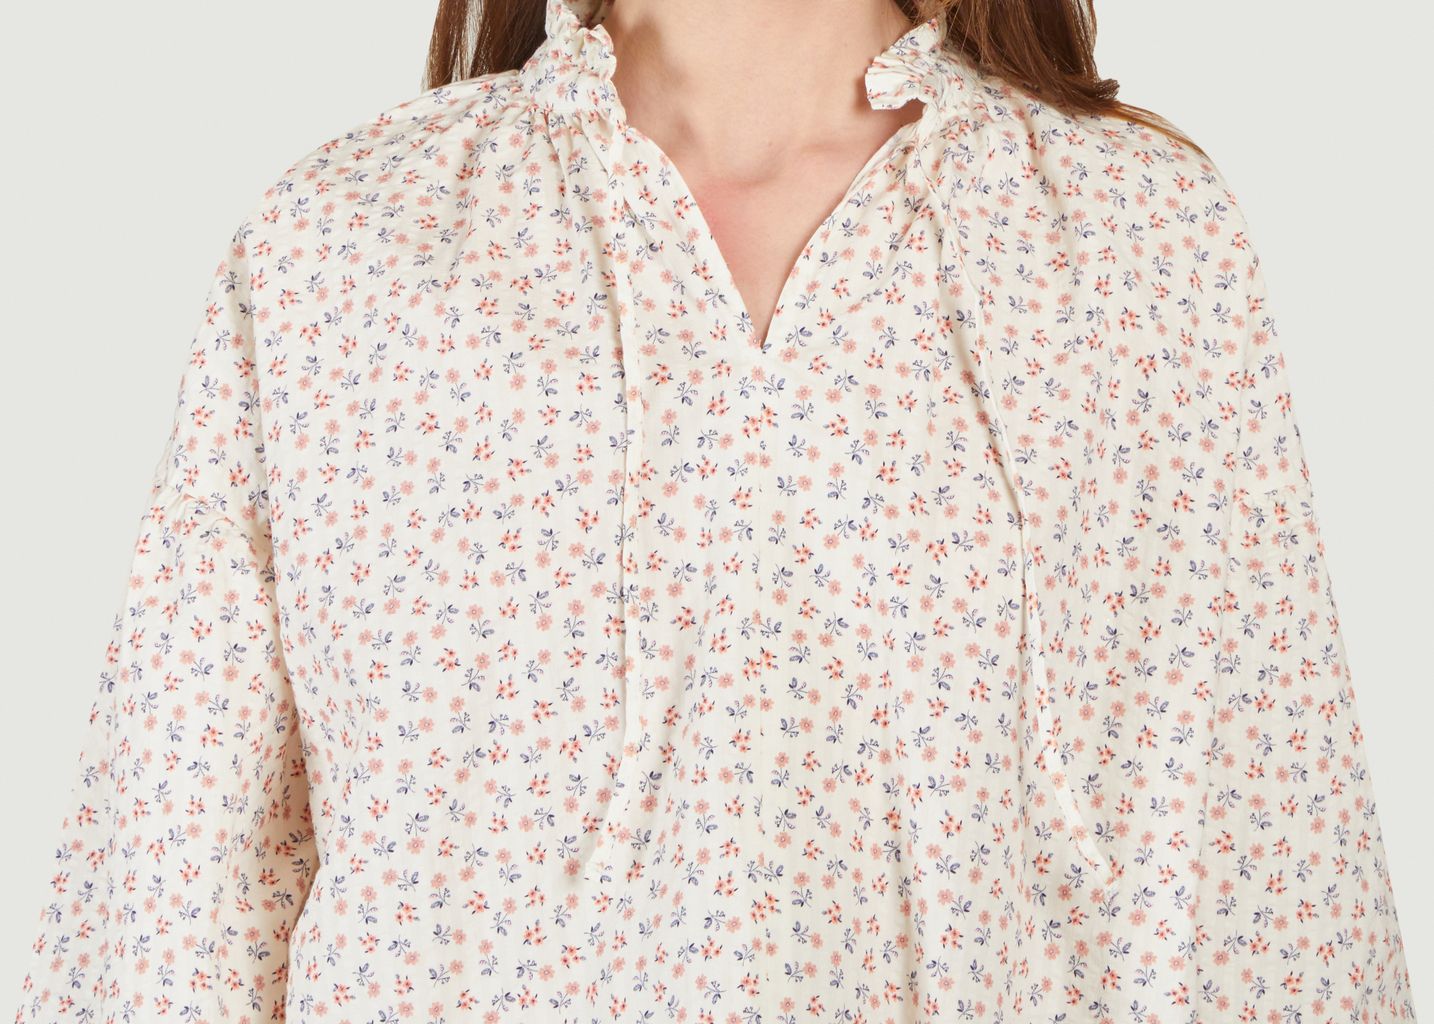 Olivia Judah oversized floral blouse - The new society